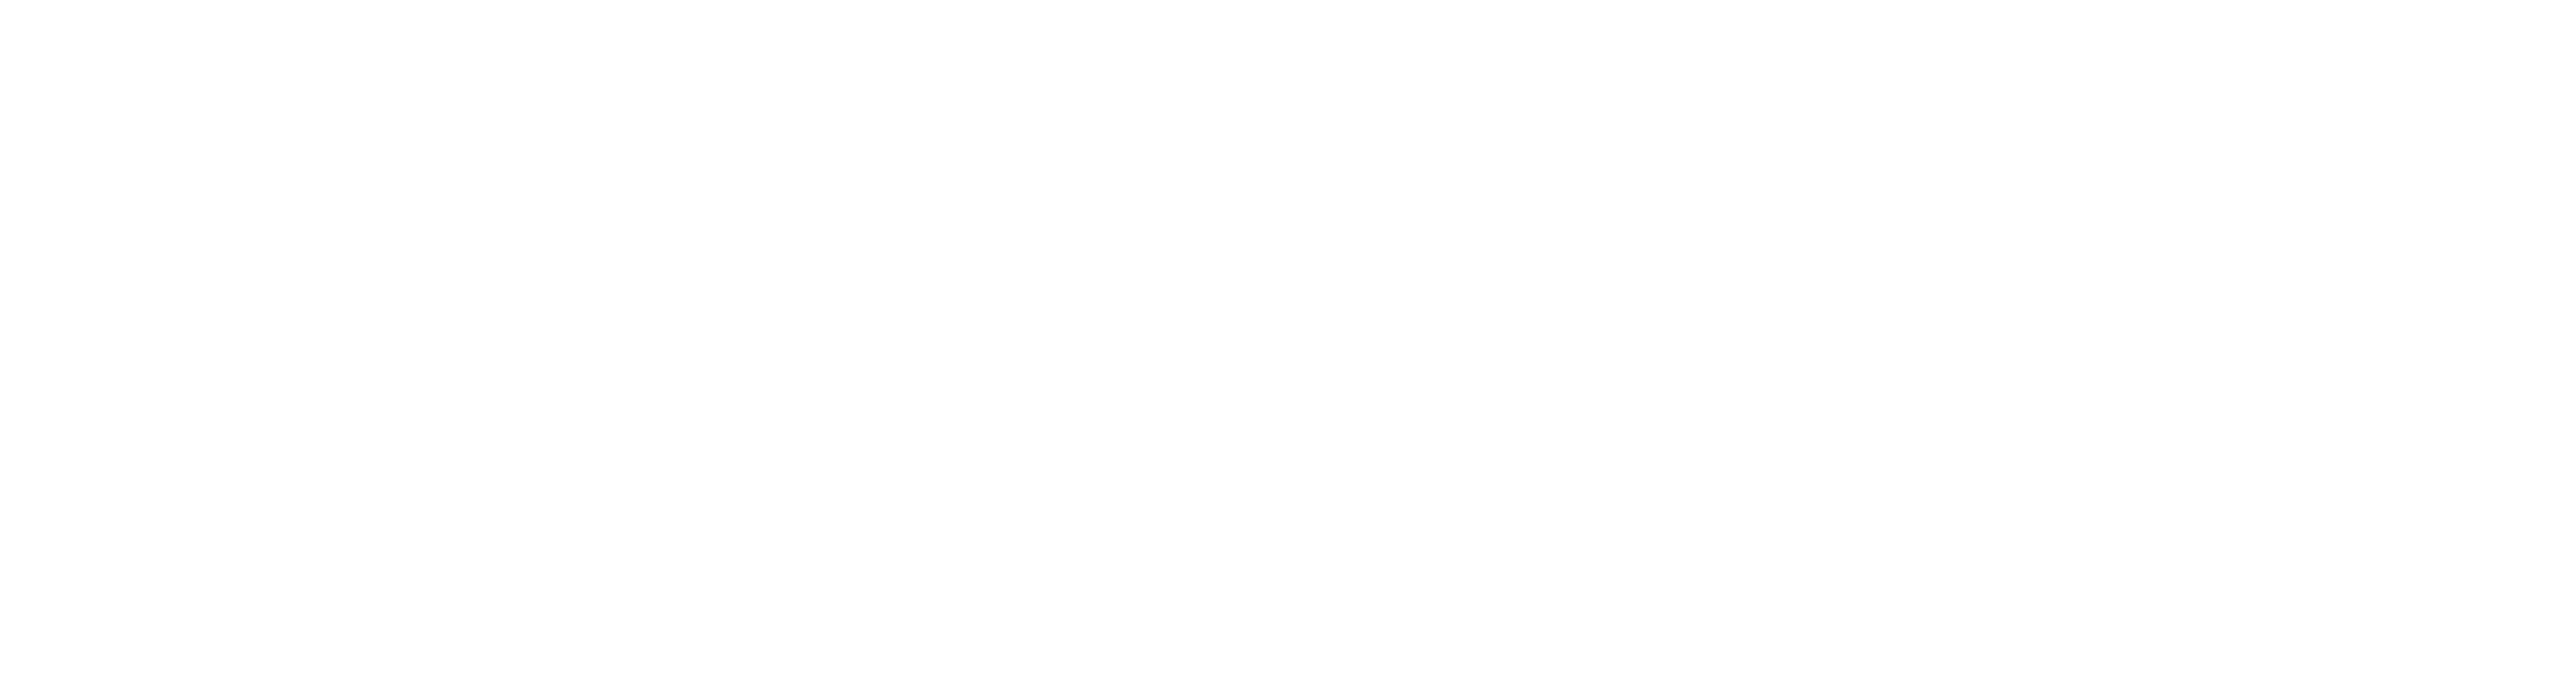 Cornerstone Advisors - Logo - Horizontal - White-1